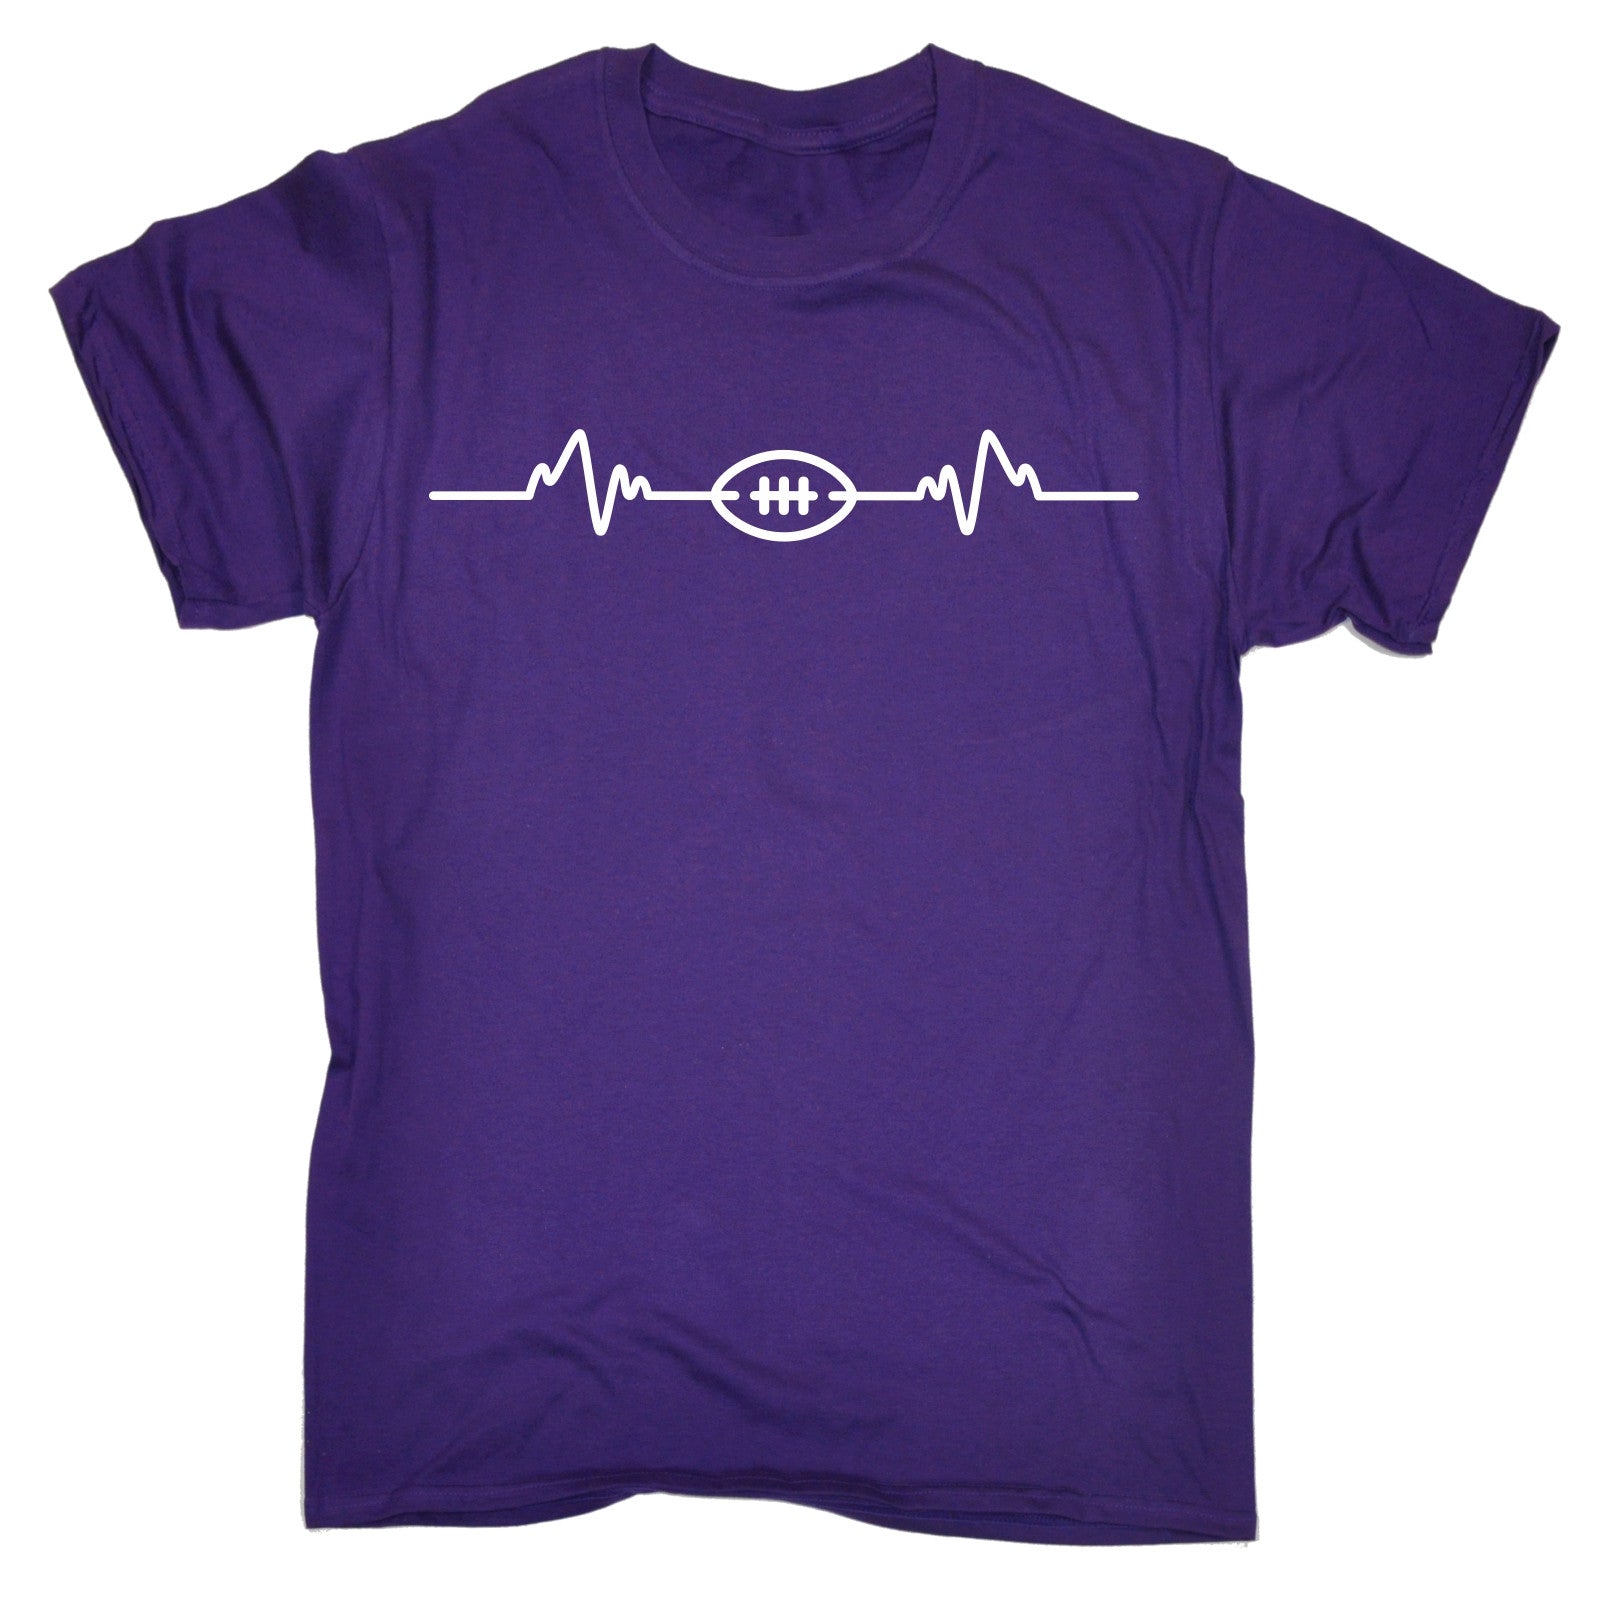 American Football Heart Beat Pulse T Shirt Clothing Sports T Birthday Funny Ebay 